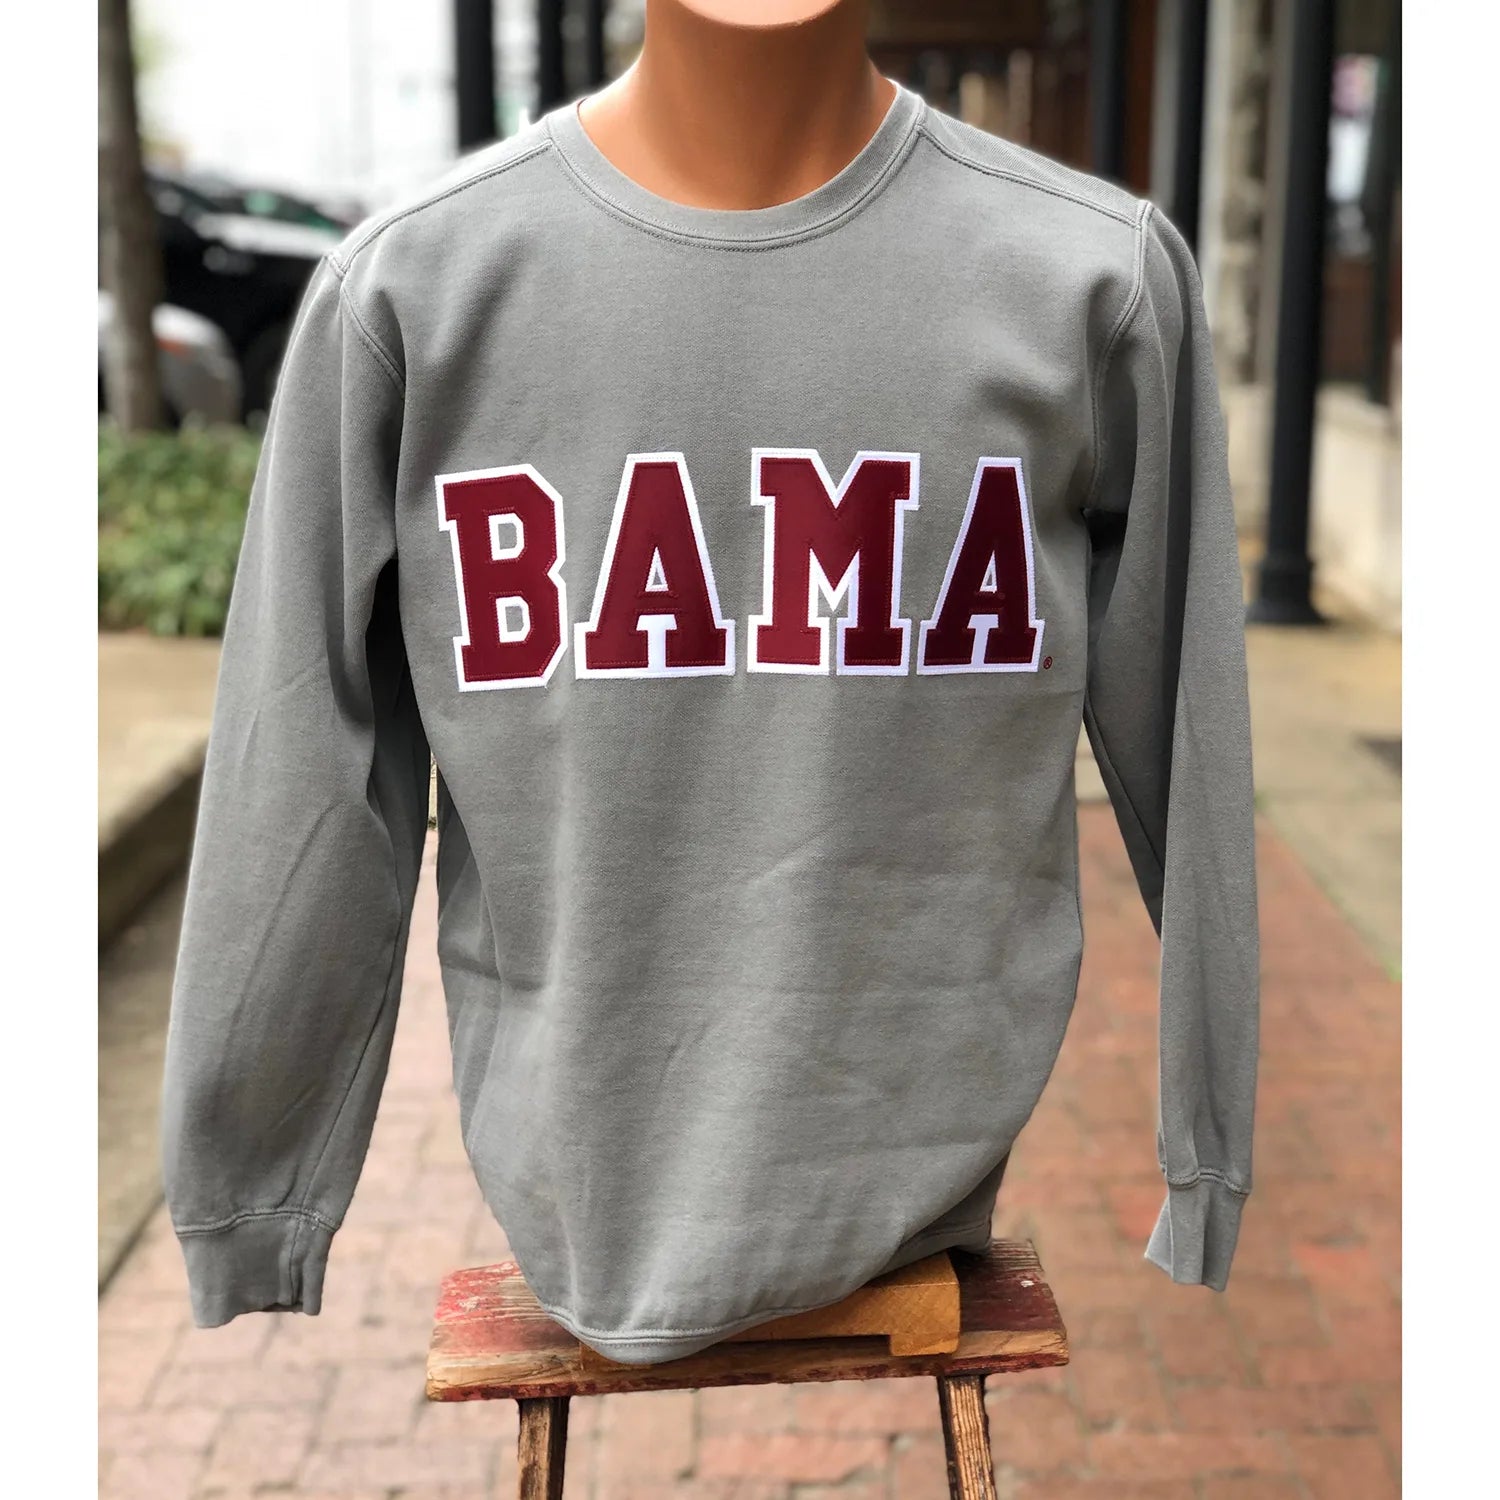 Custom Alabama Sweatshirt with BAMA in applique letters